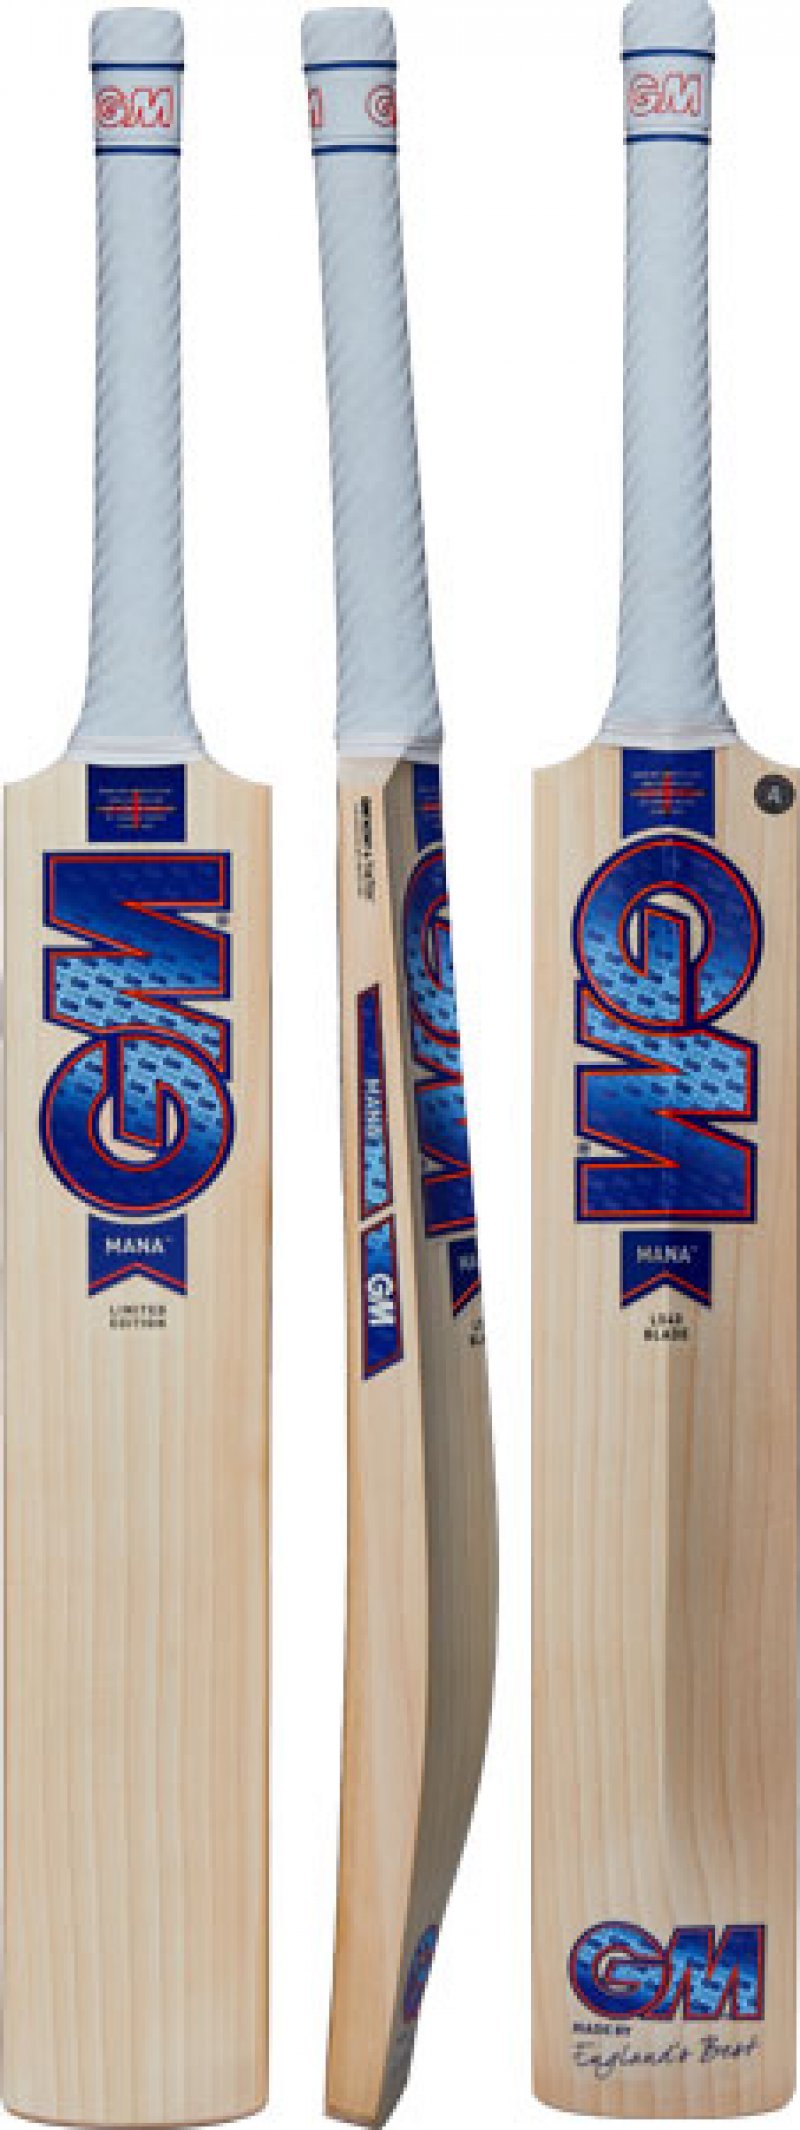 Gunn and Moore Mana L540 DXM 808 Cricket Bat